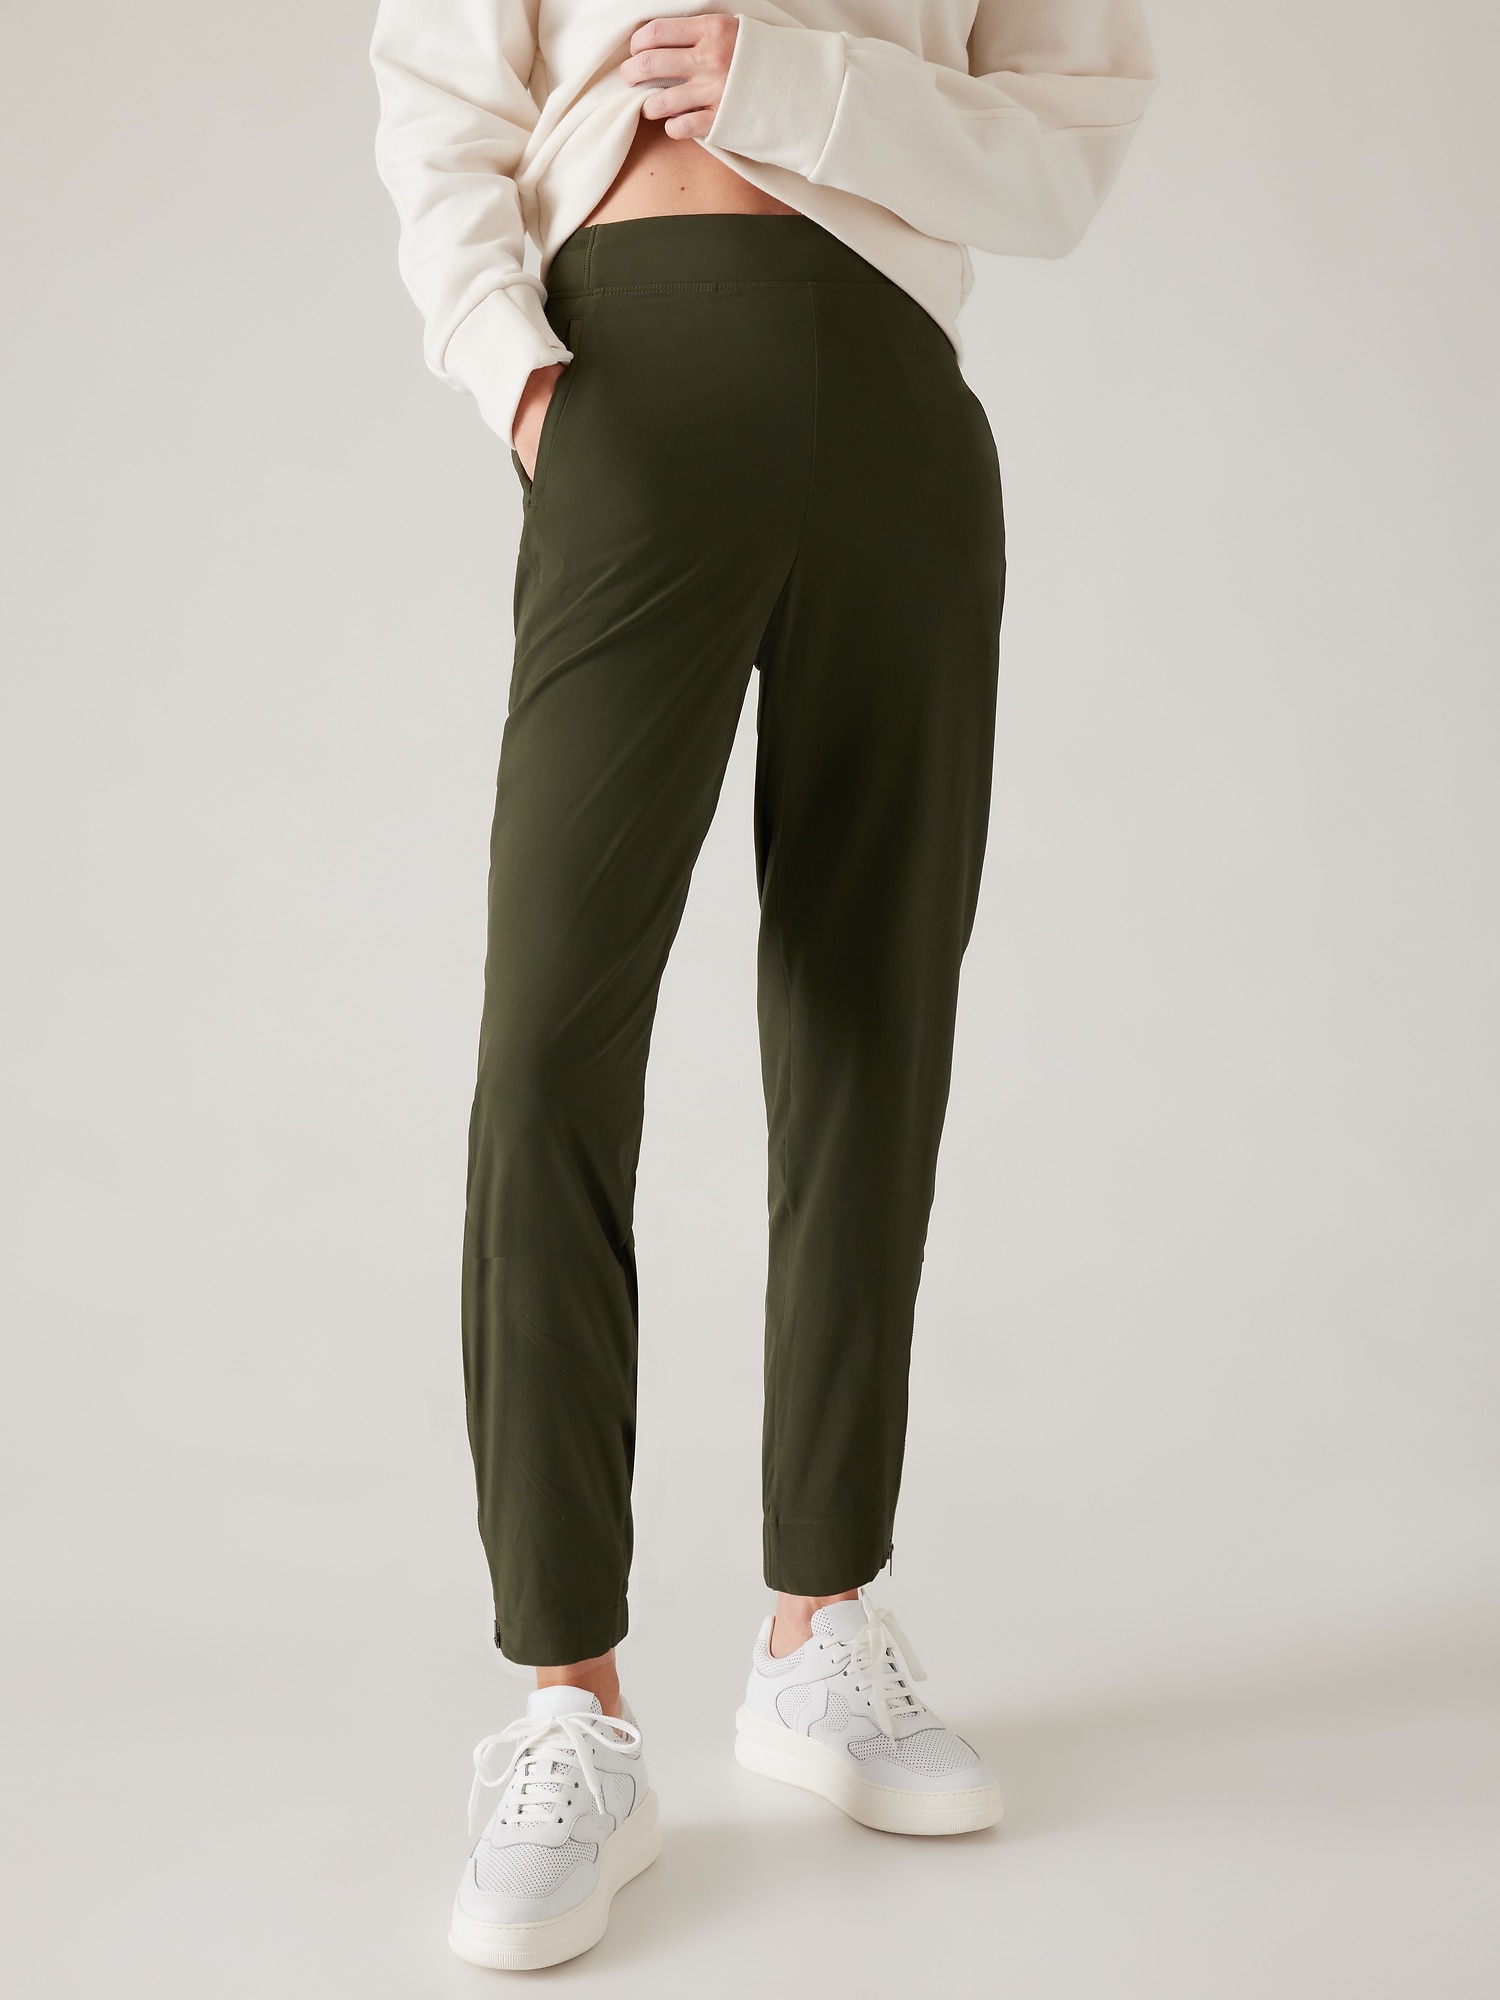 Athleta Olive Green Women's Pants With Zipper Pockets & Legs Size